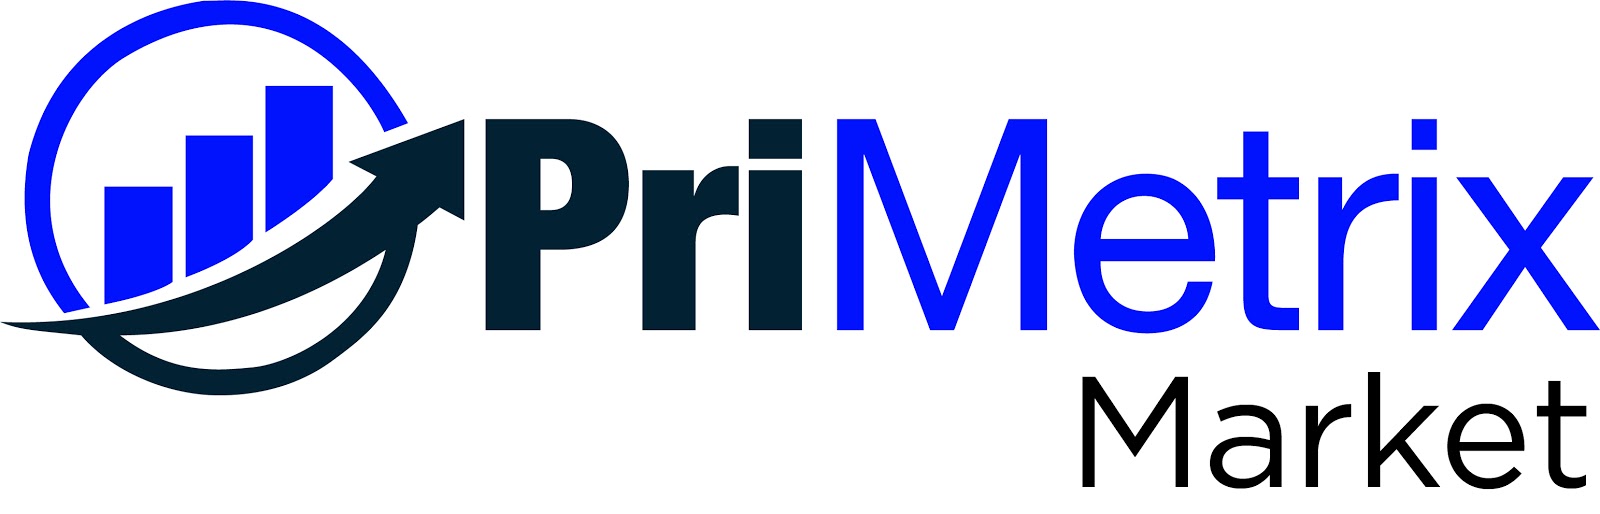 primetrix market